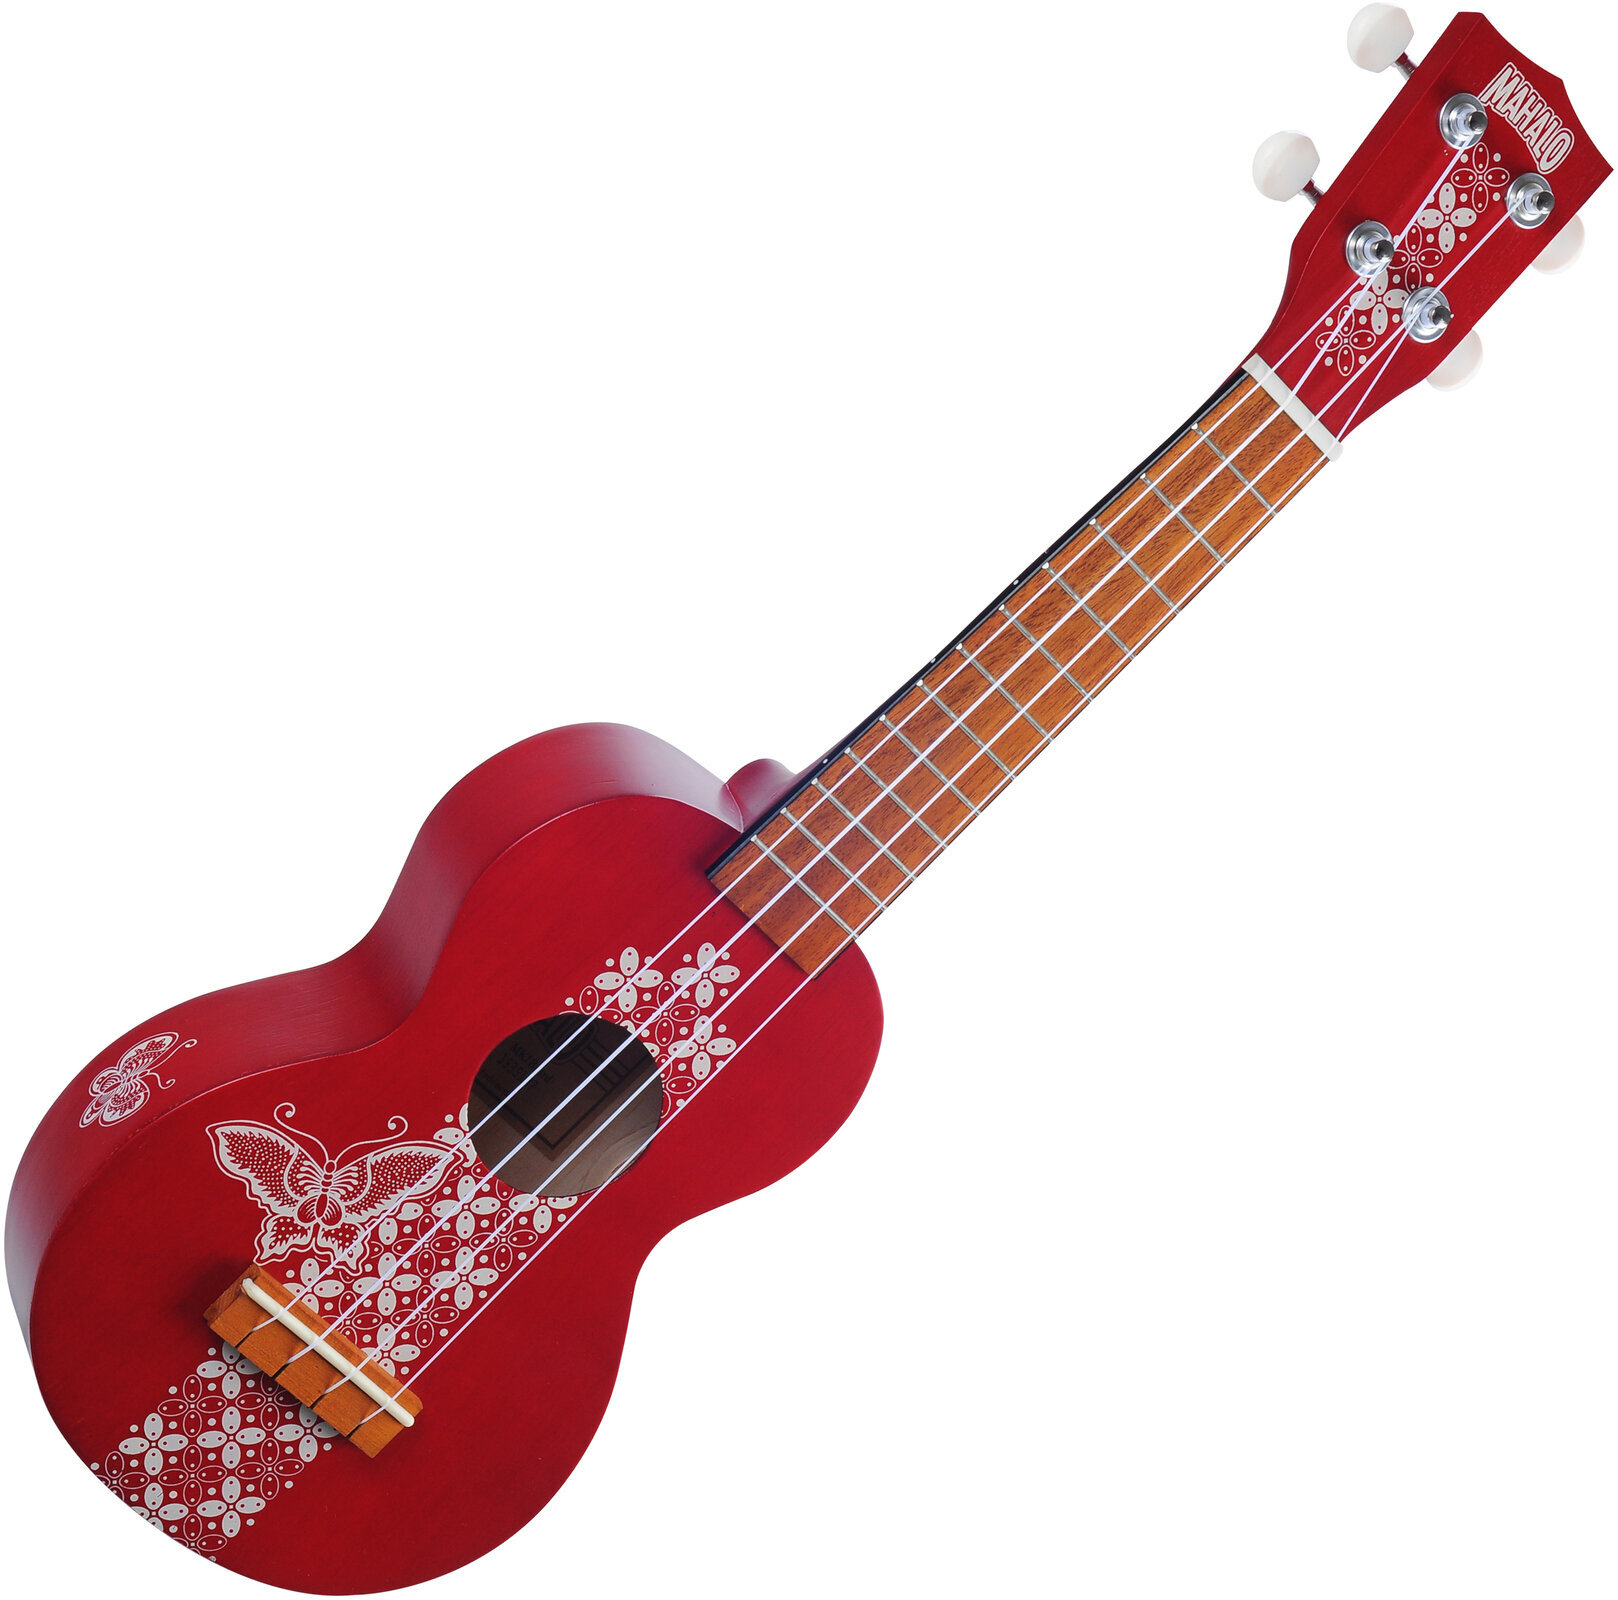 Sopran ukulele Mahalo MK1BA Sopran ukulele Batik Transparent Red